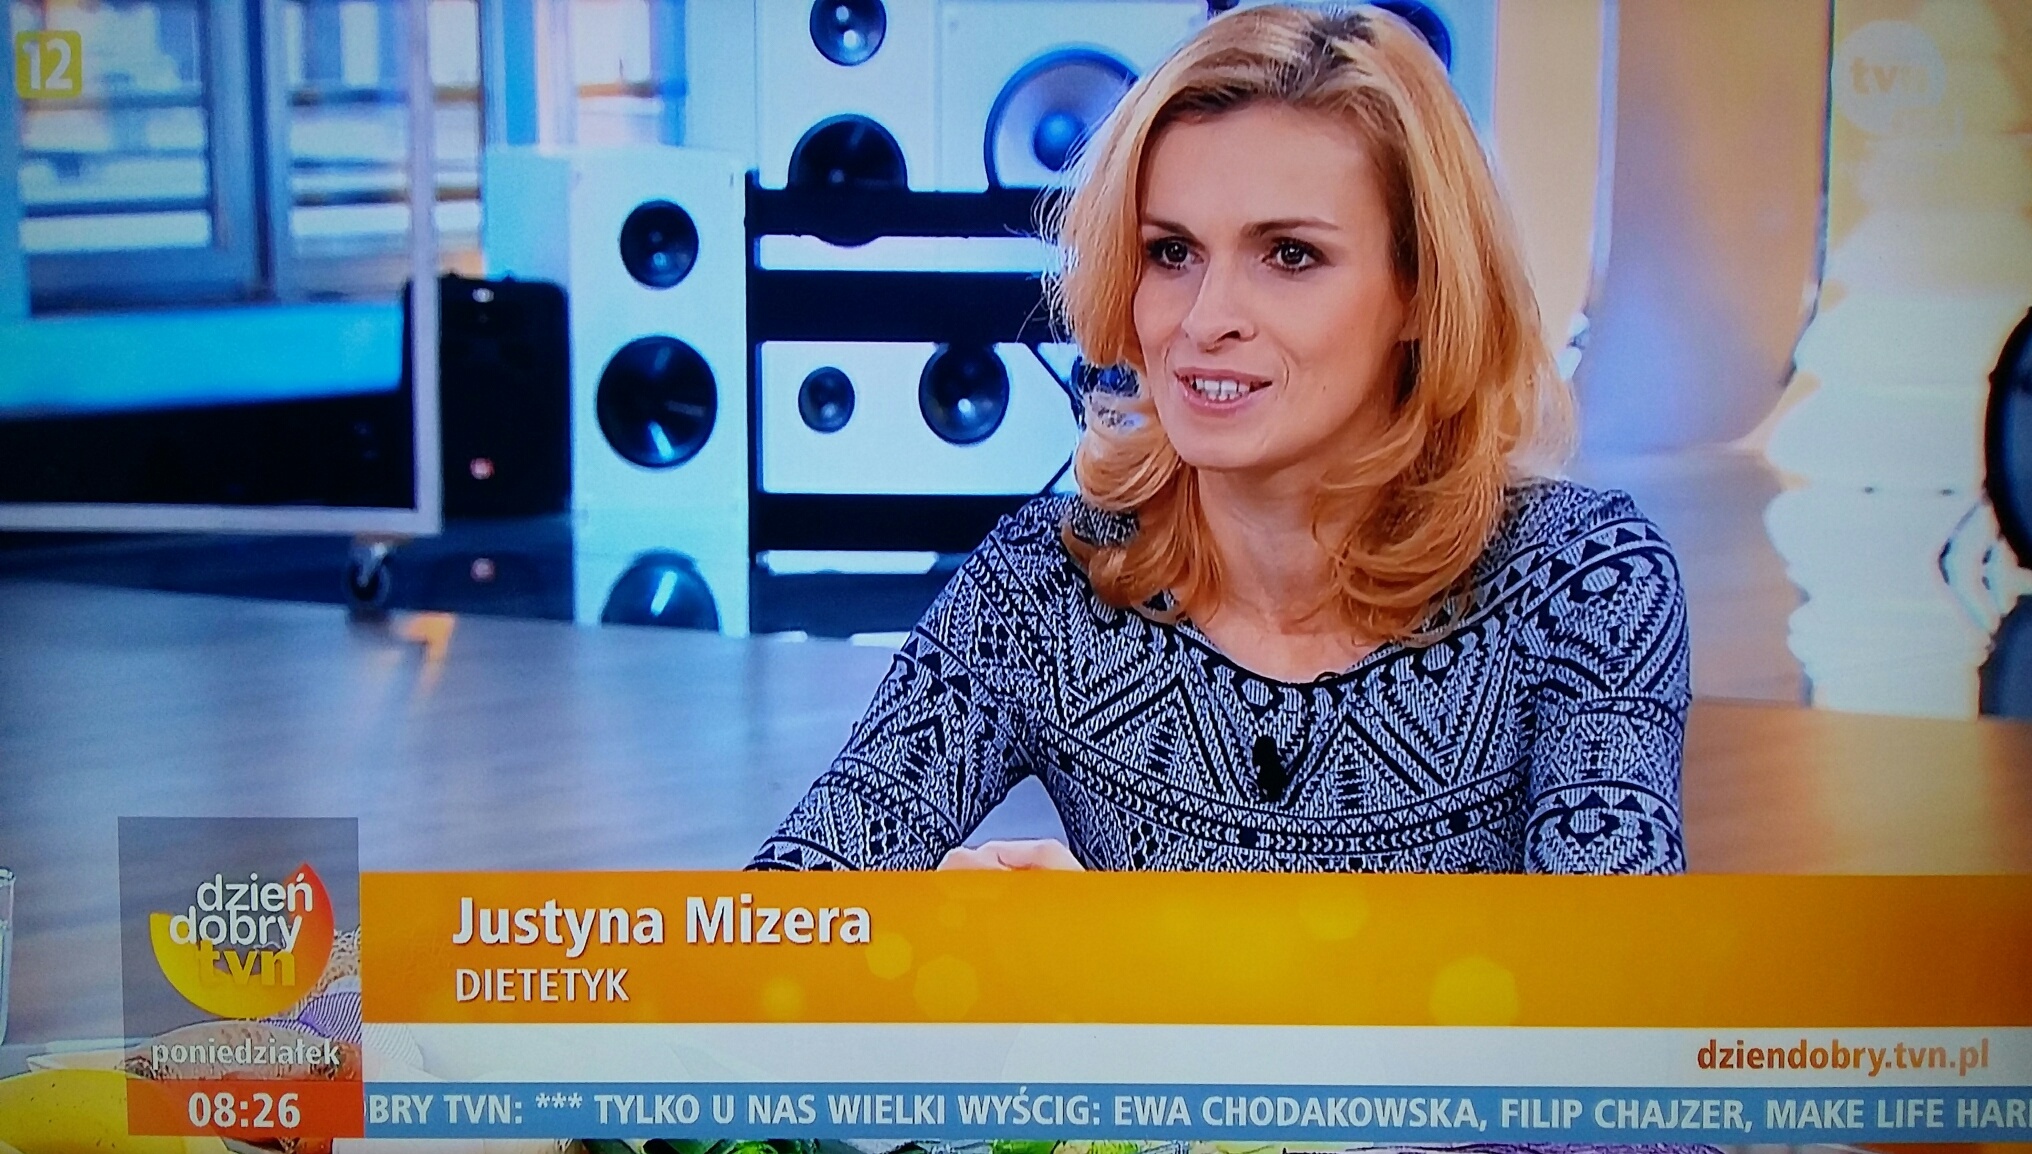 Justyna Mizera dietetyk gwiazd